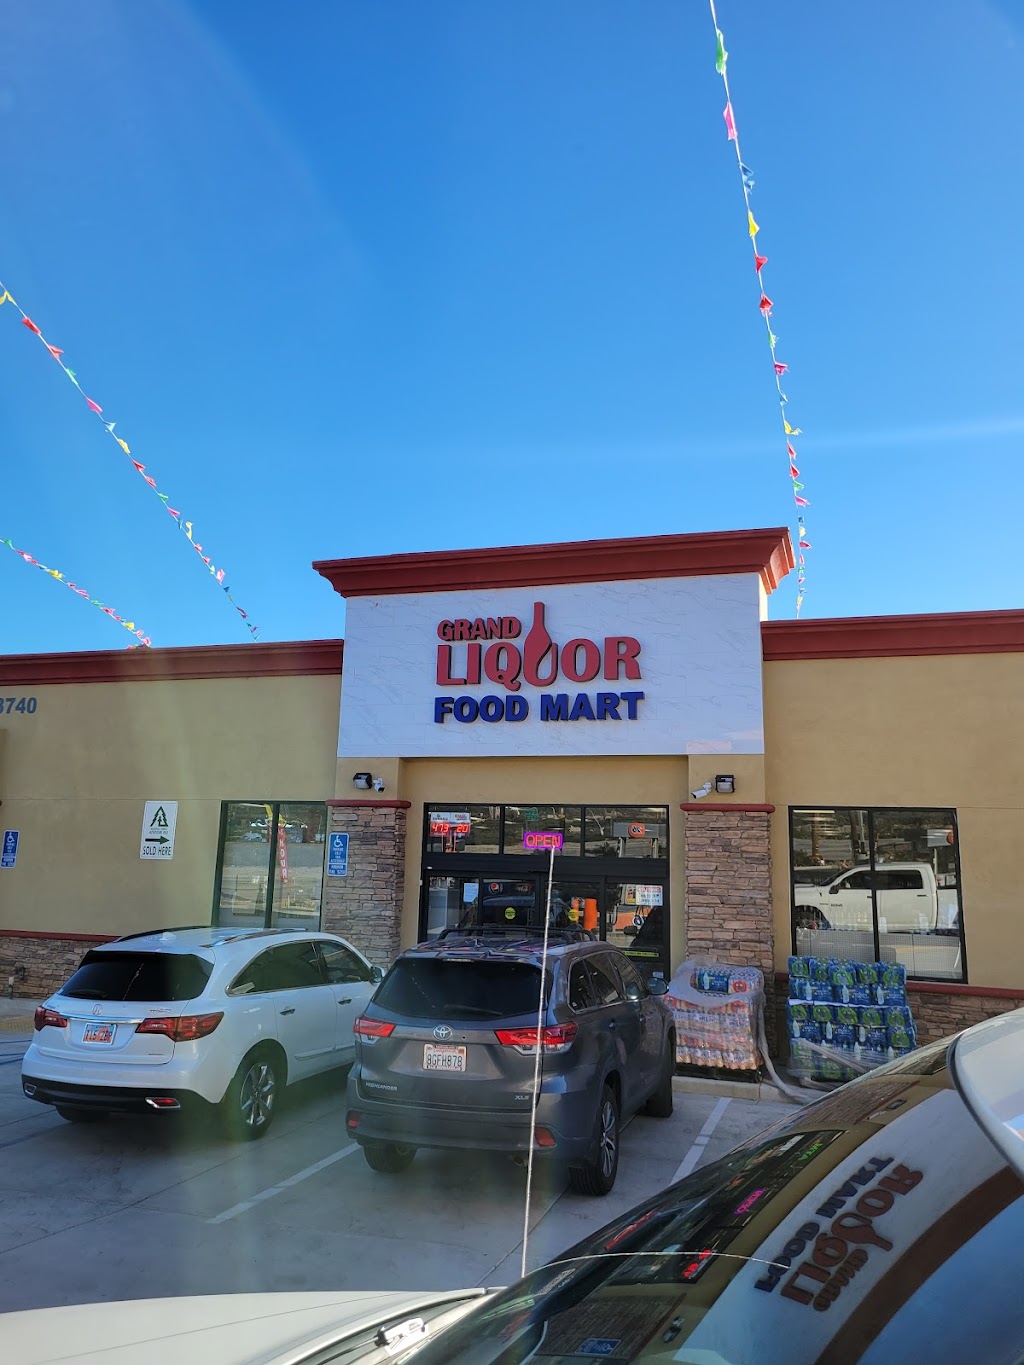 76 Grand Liquor Gas and Food | 3740 Sierra Ave., Fontana, CA 92336 | Phone: (909) 414-3515